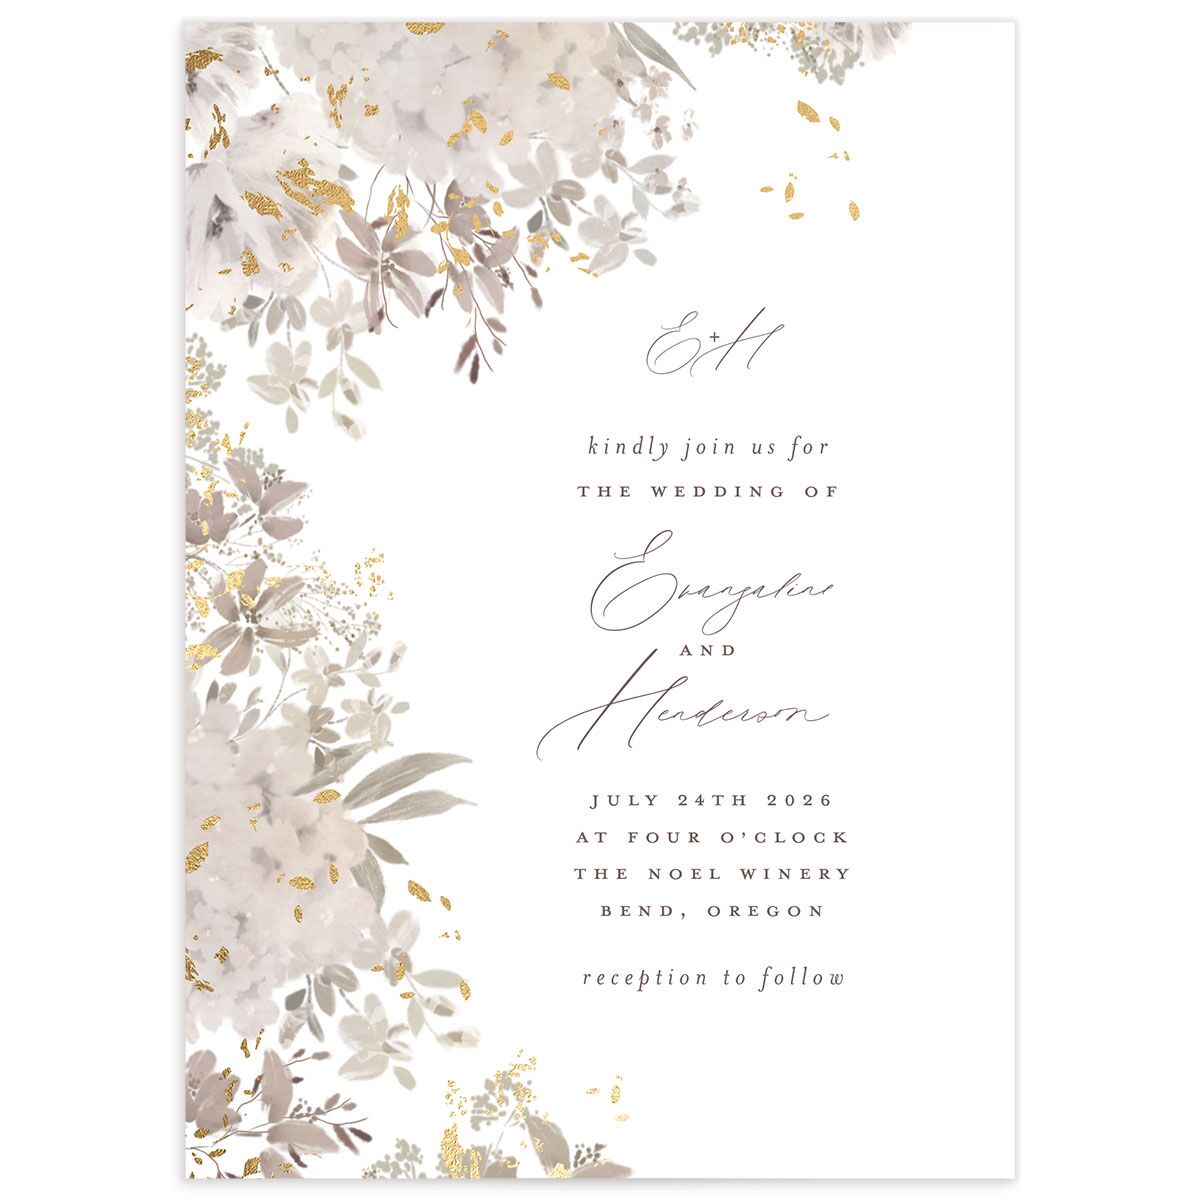 Monochrome Blooms Wedding Invitations